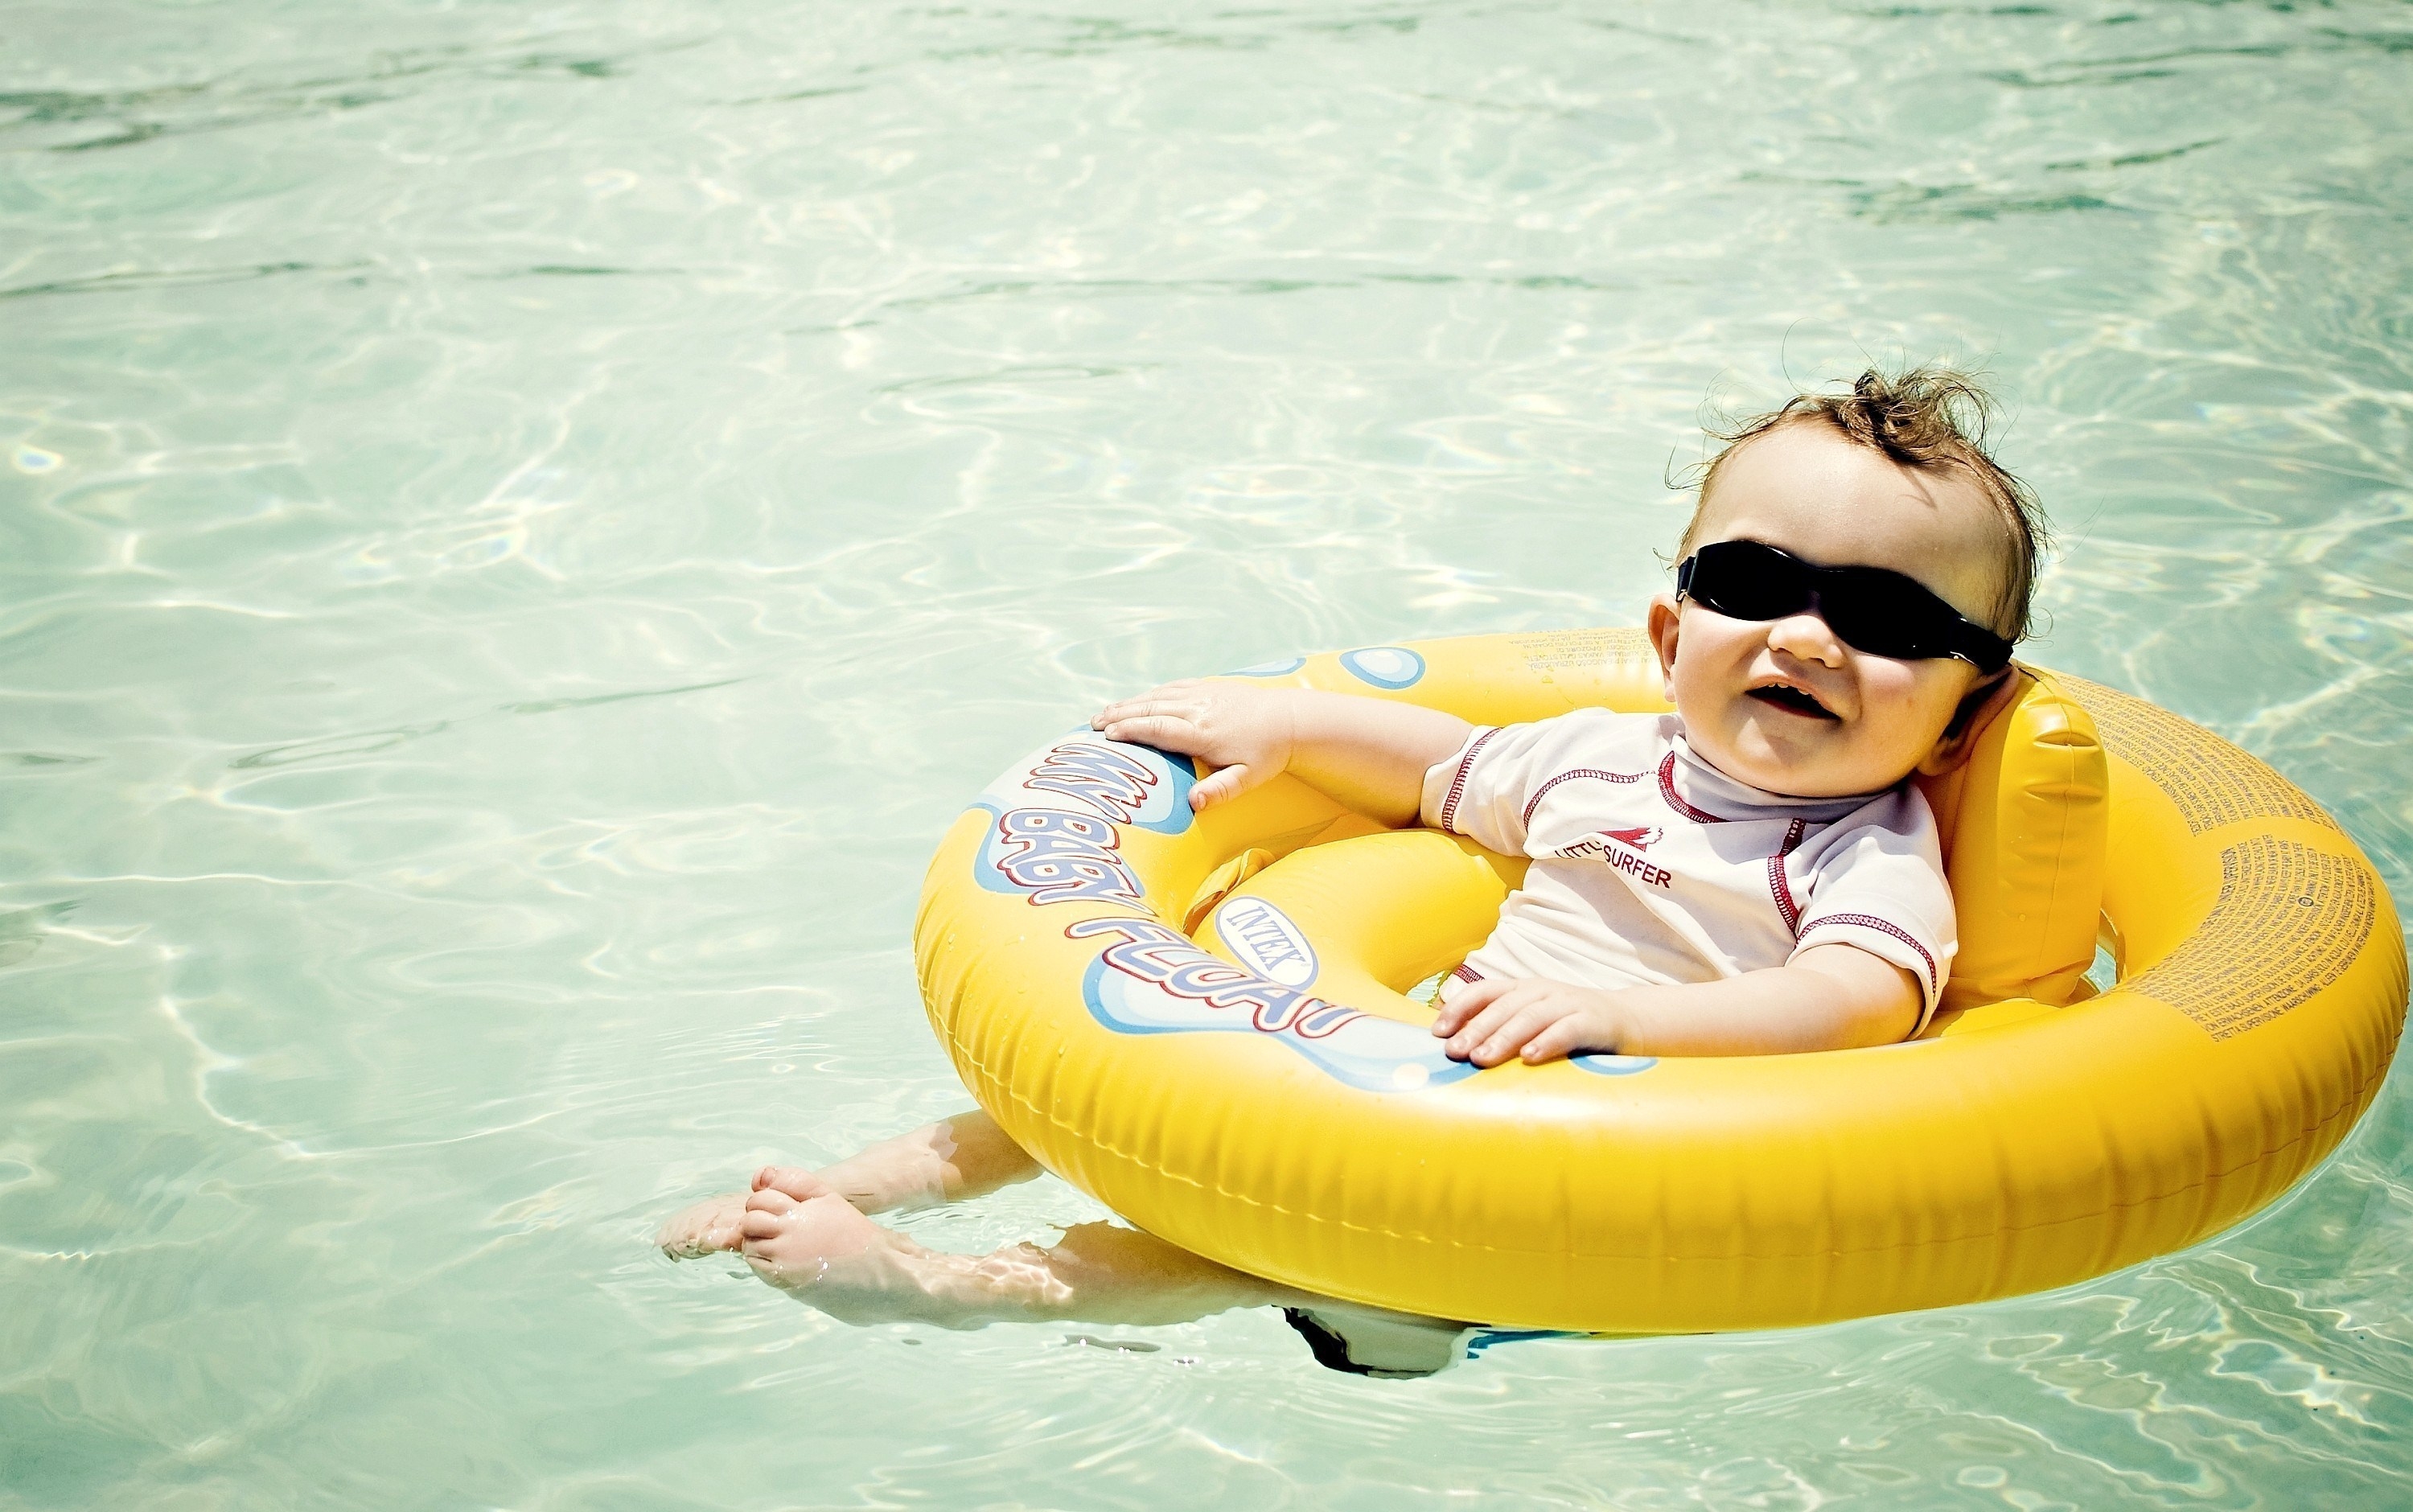 Baby, Life buoy, Swimming pool, Sun glasses